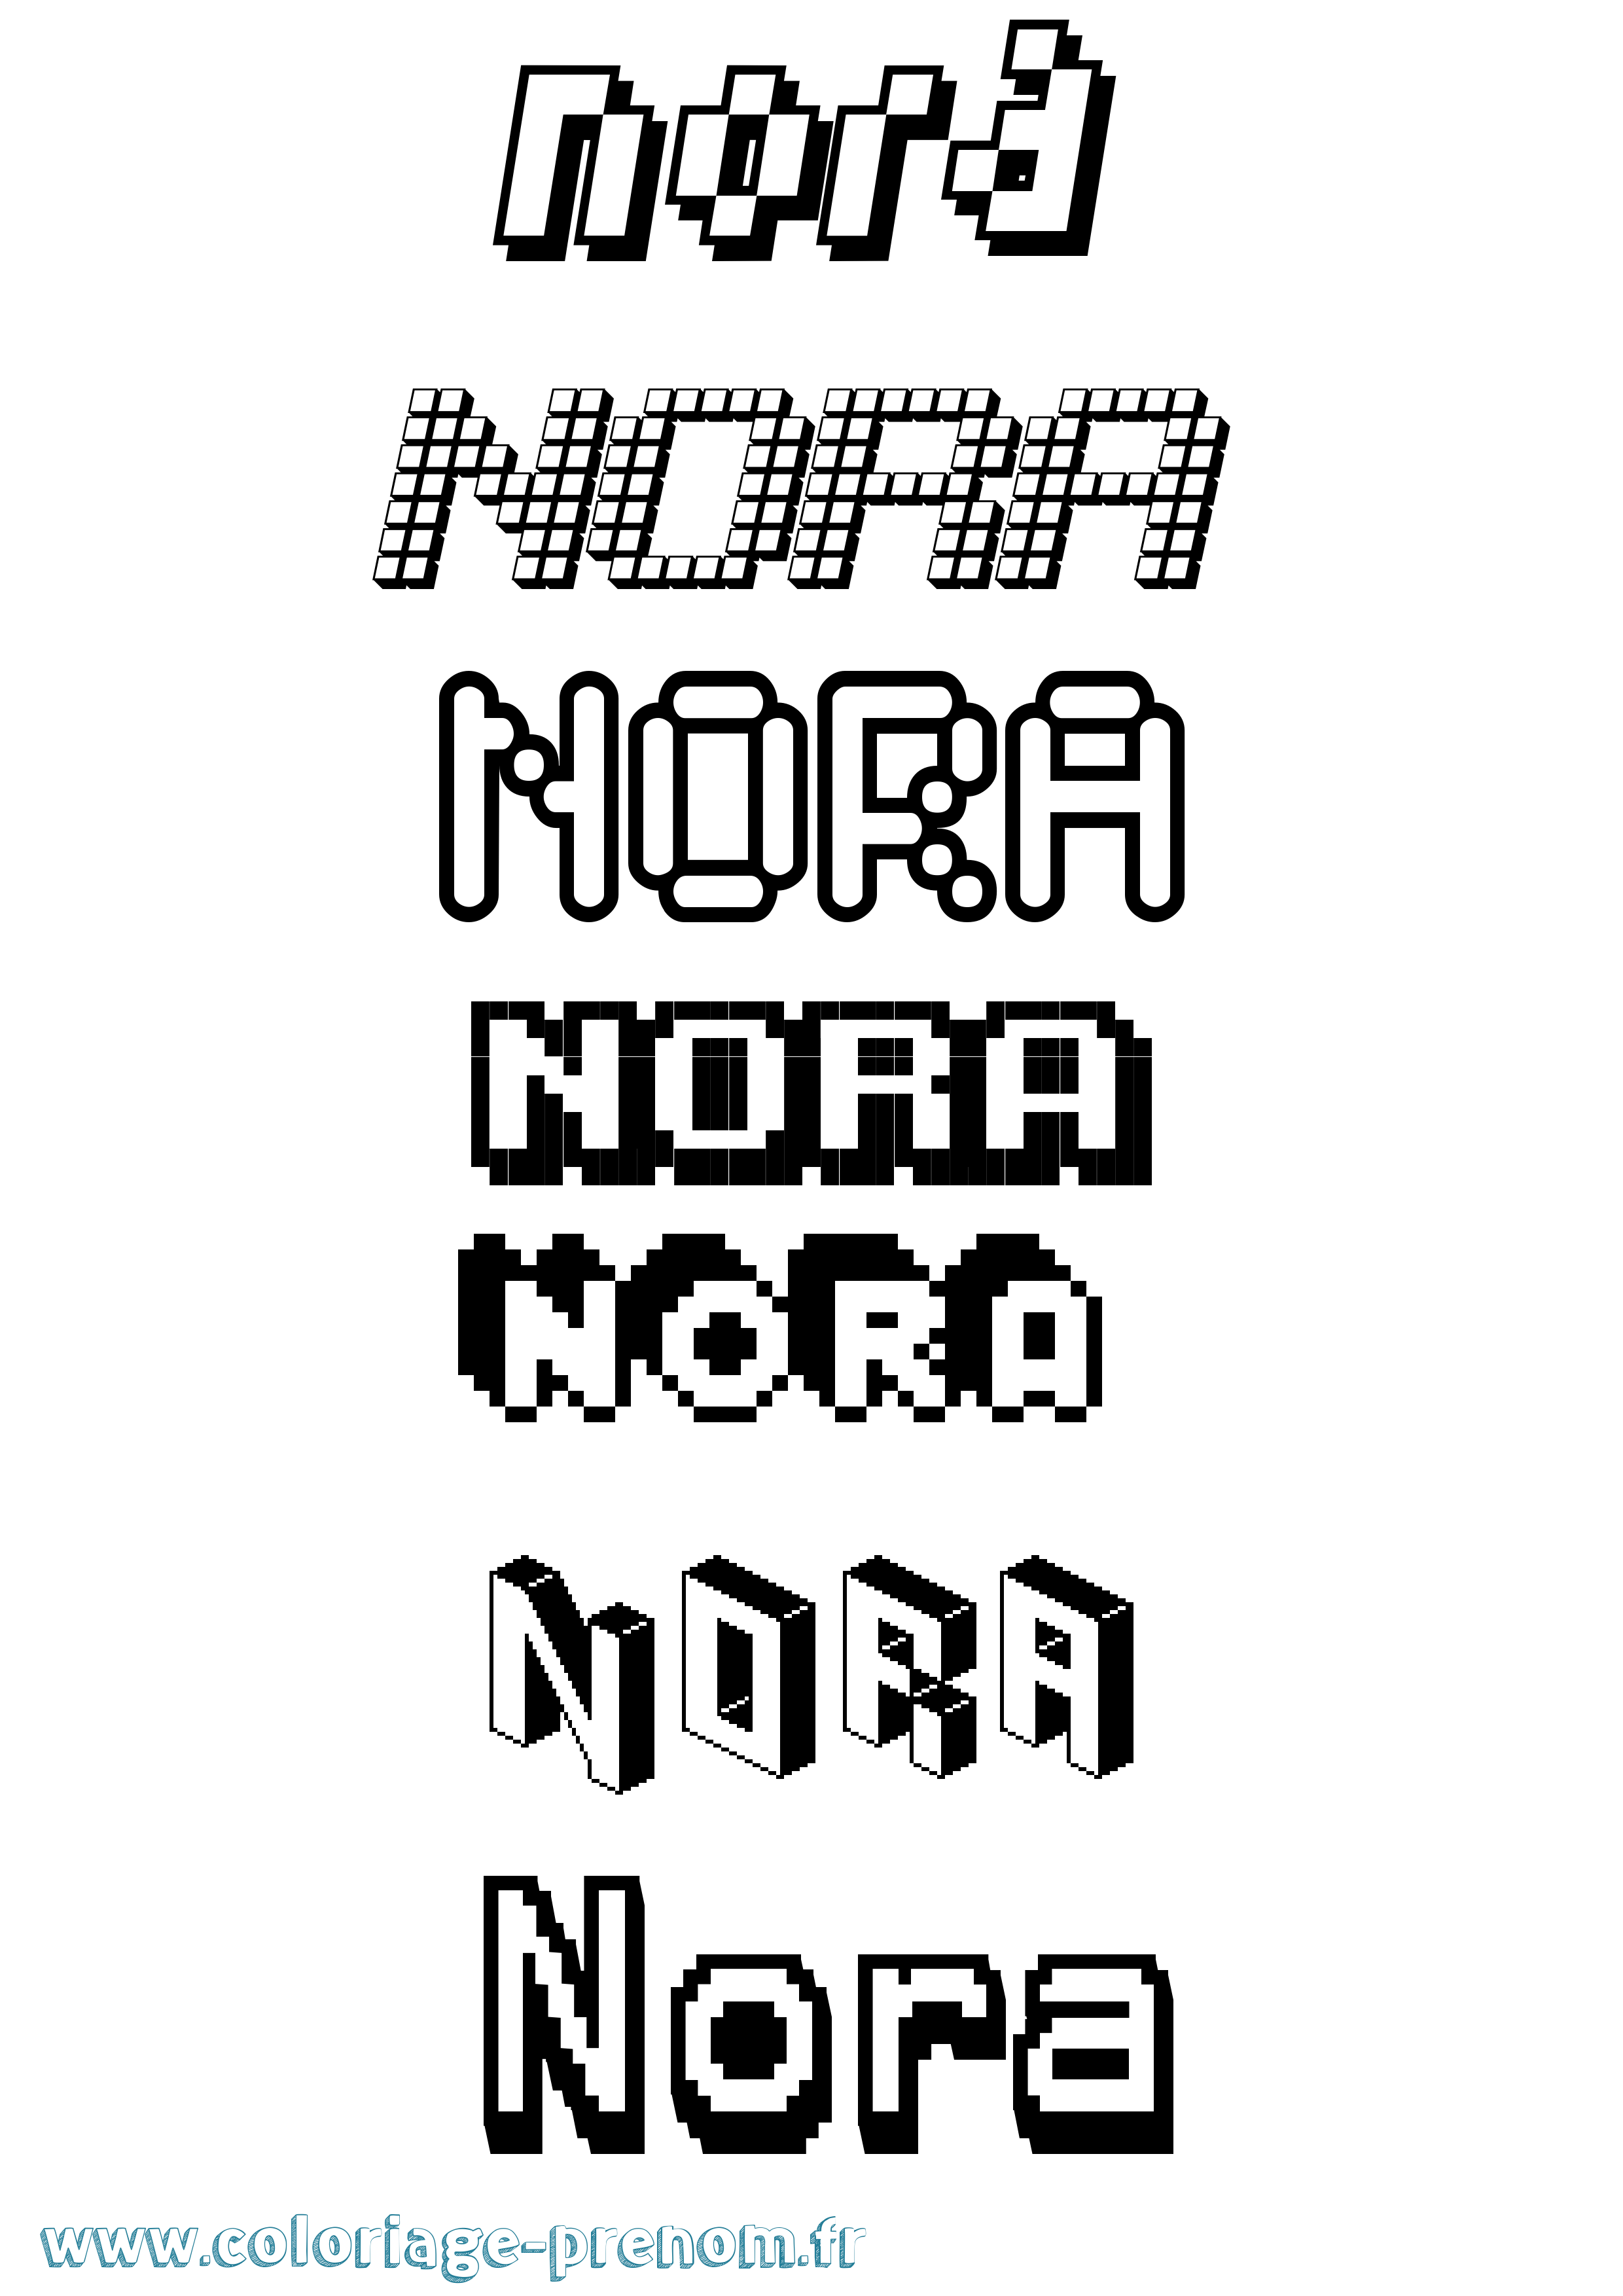 Coloriage prénom Nora Pixel